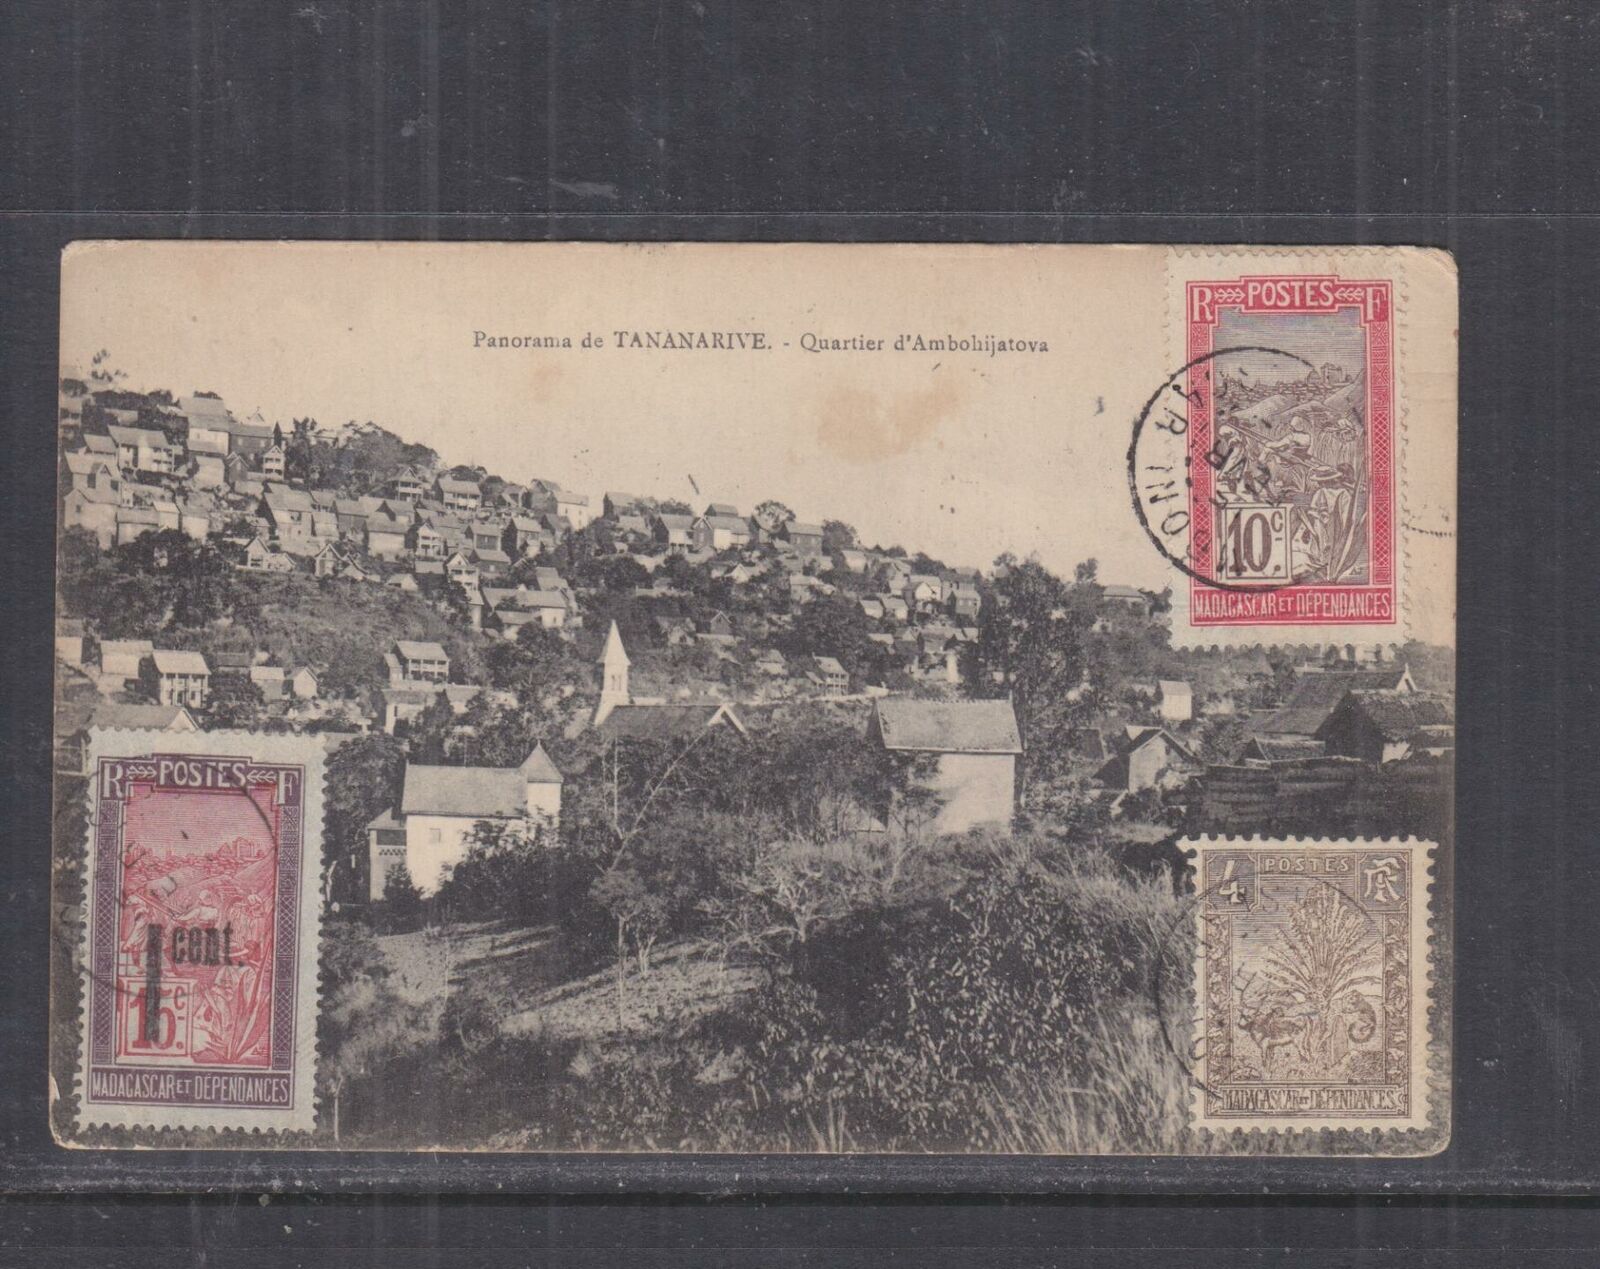 MADAGASCAR, c1925 ppc. TANANARIVE, 4c., 10c., 1c. on 15c. to France.